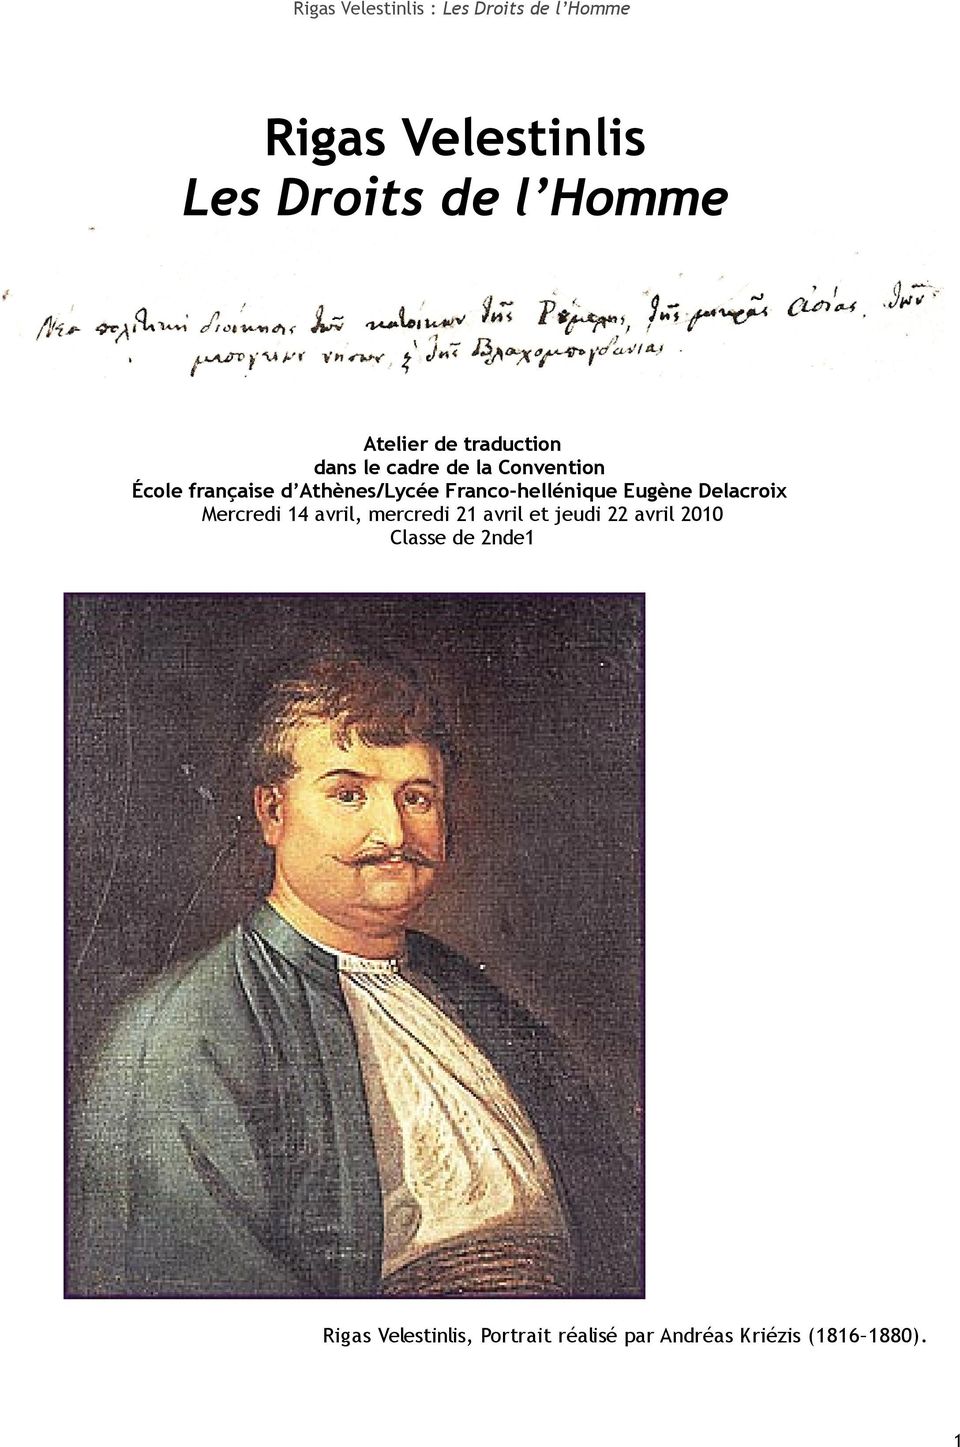 Franco-hellénique Eugène Delacroix Mercredi 14 avril, mercredi 21 avril et jeudi 22